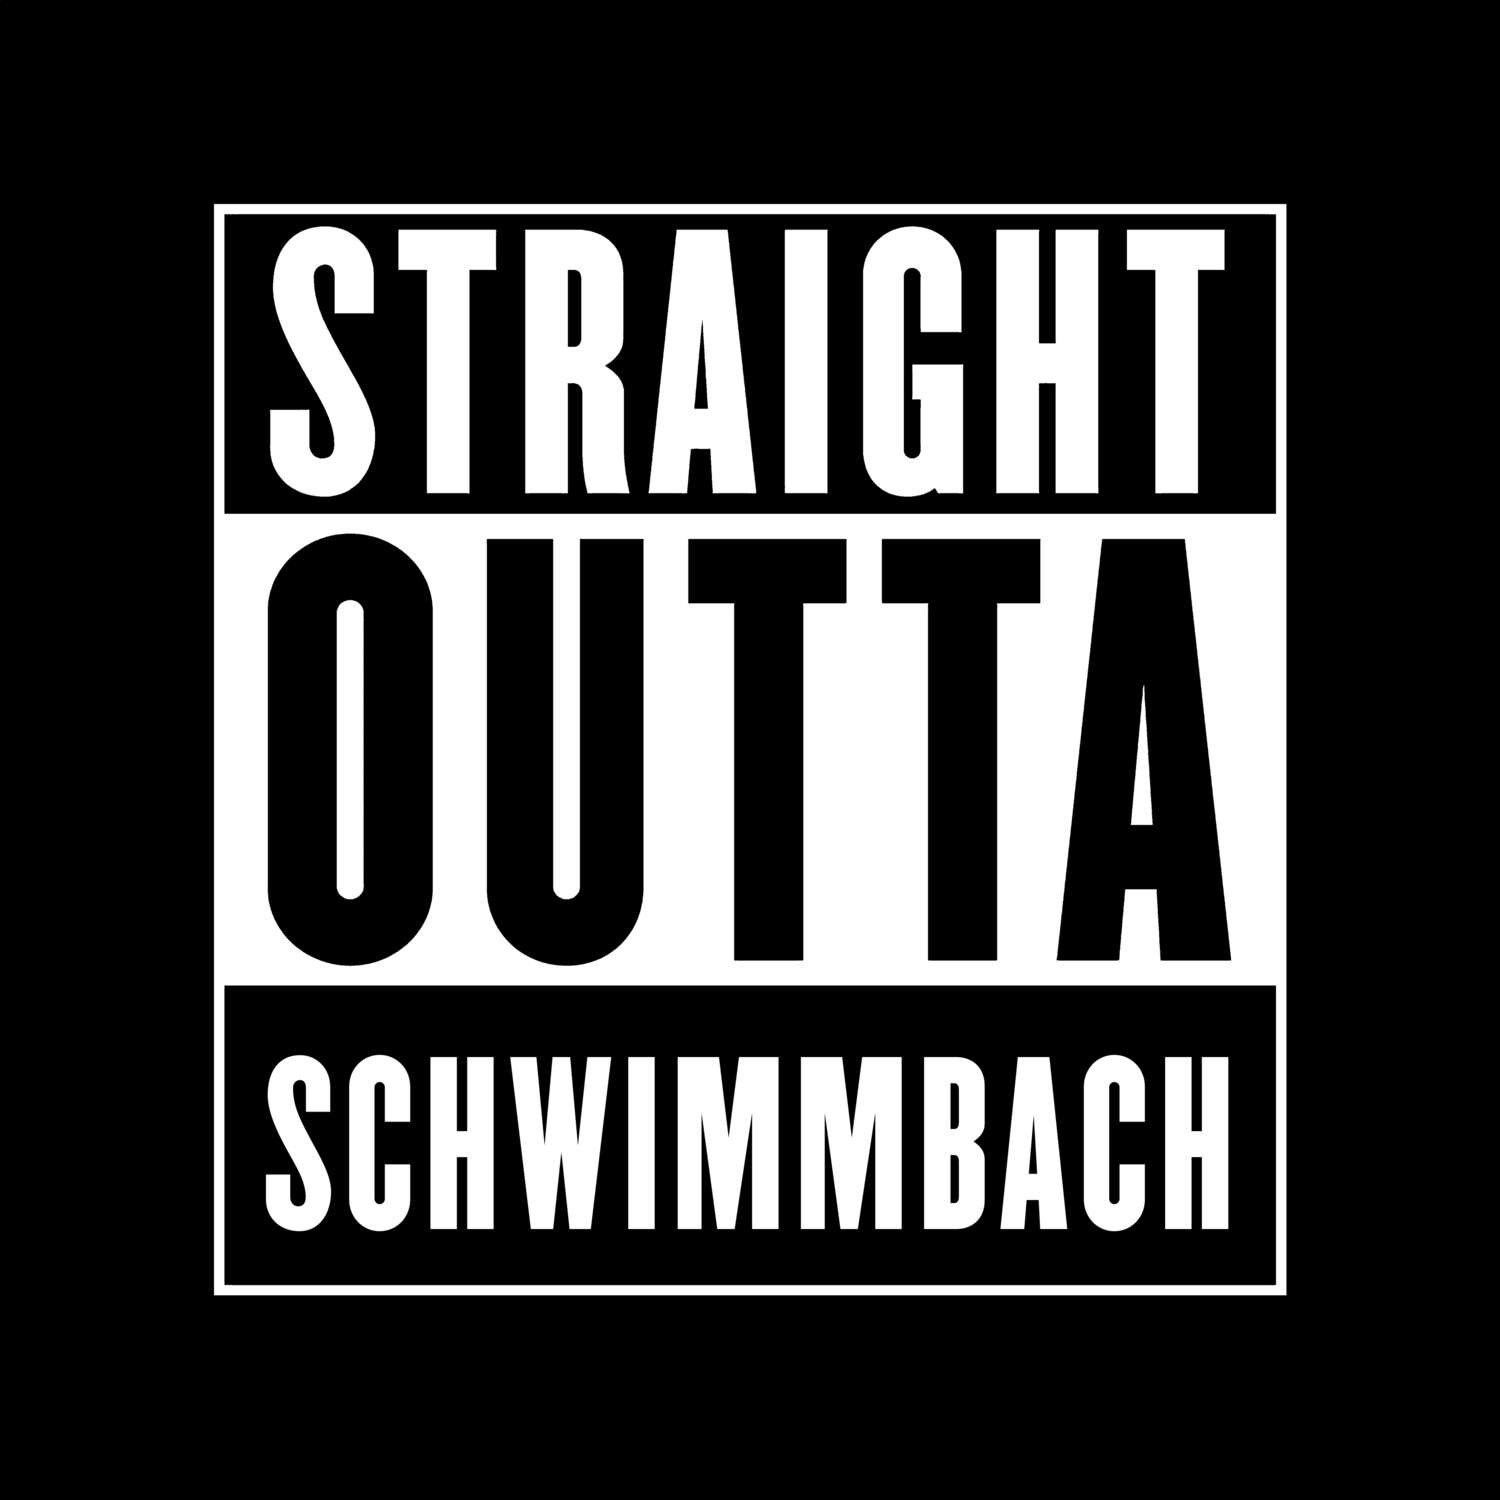 Schwimmbach T-Shirt »Straight Outta«